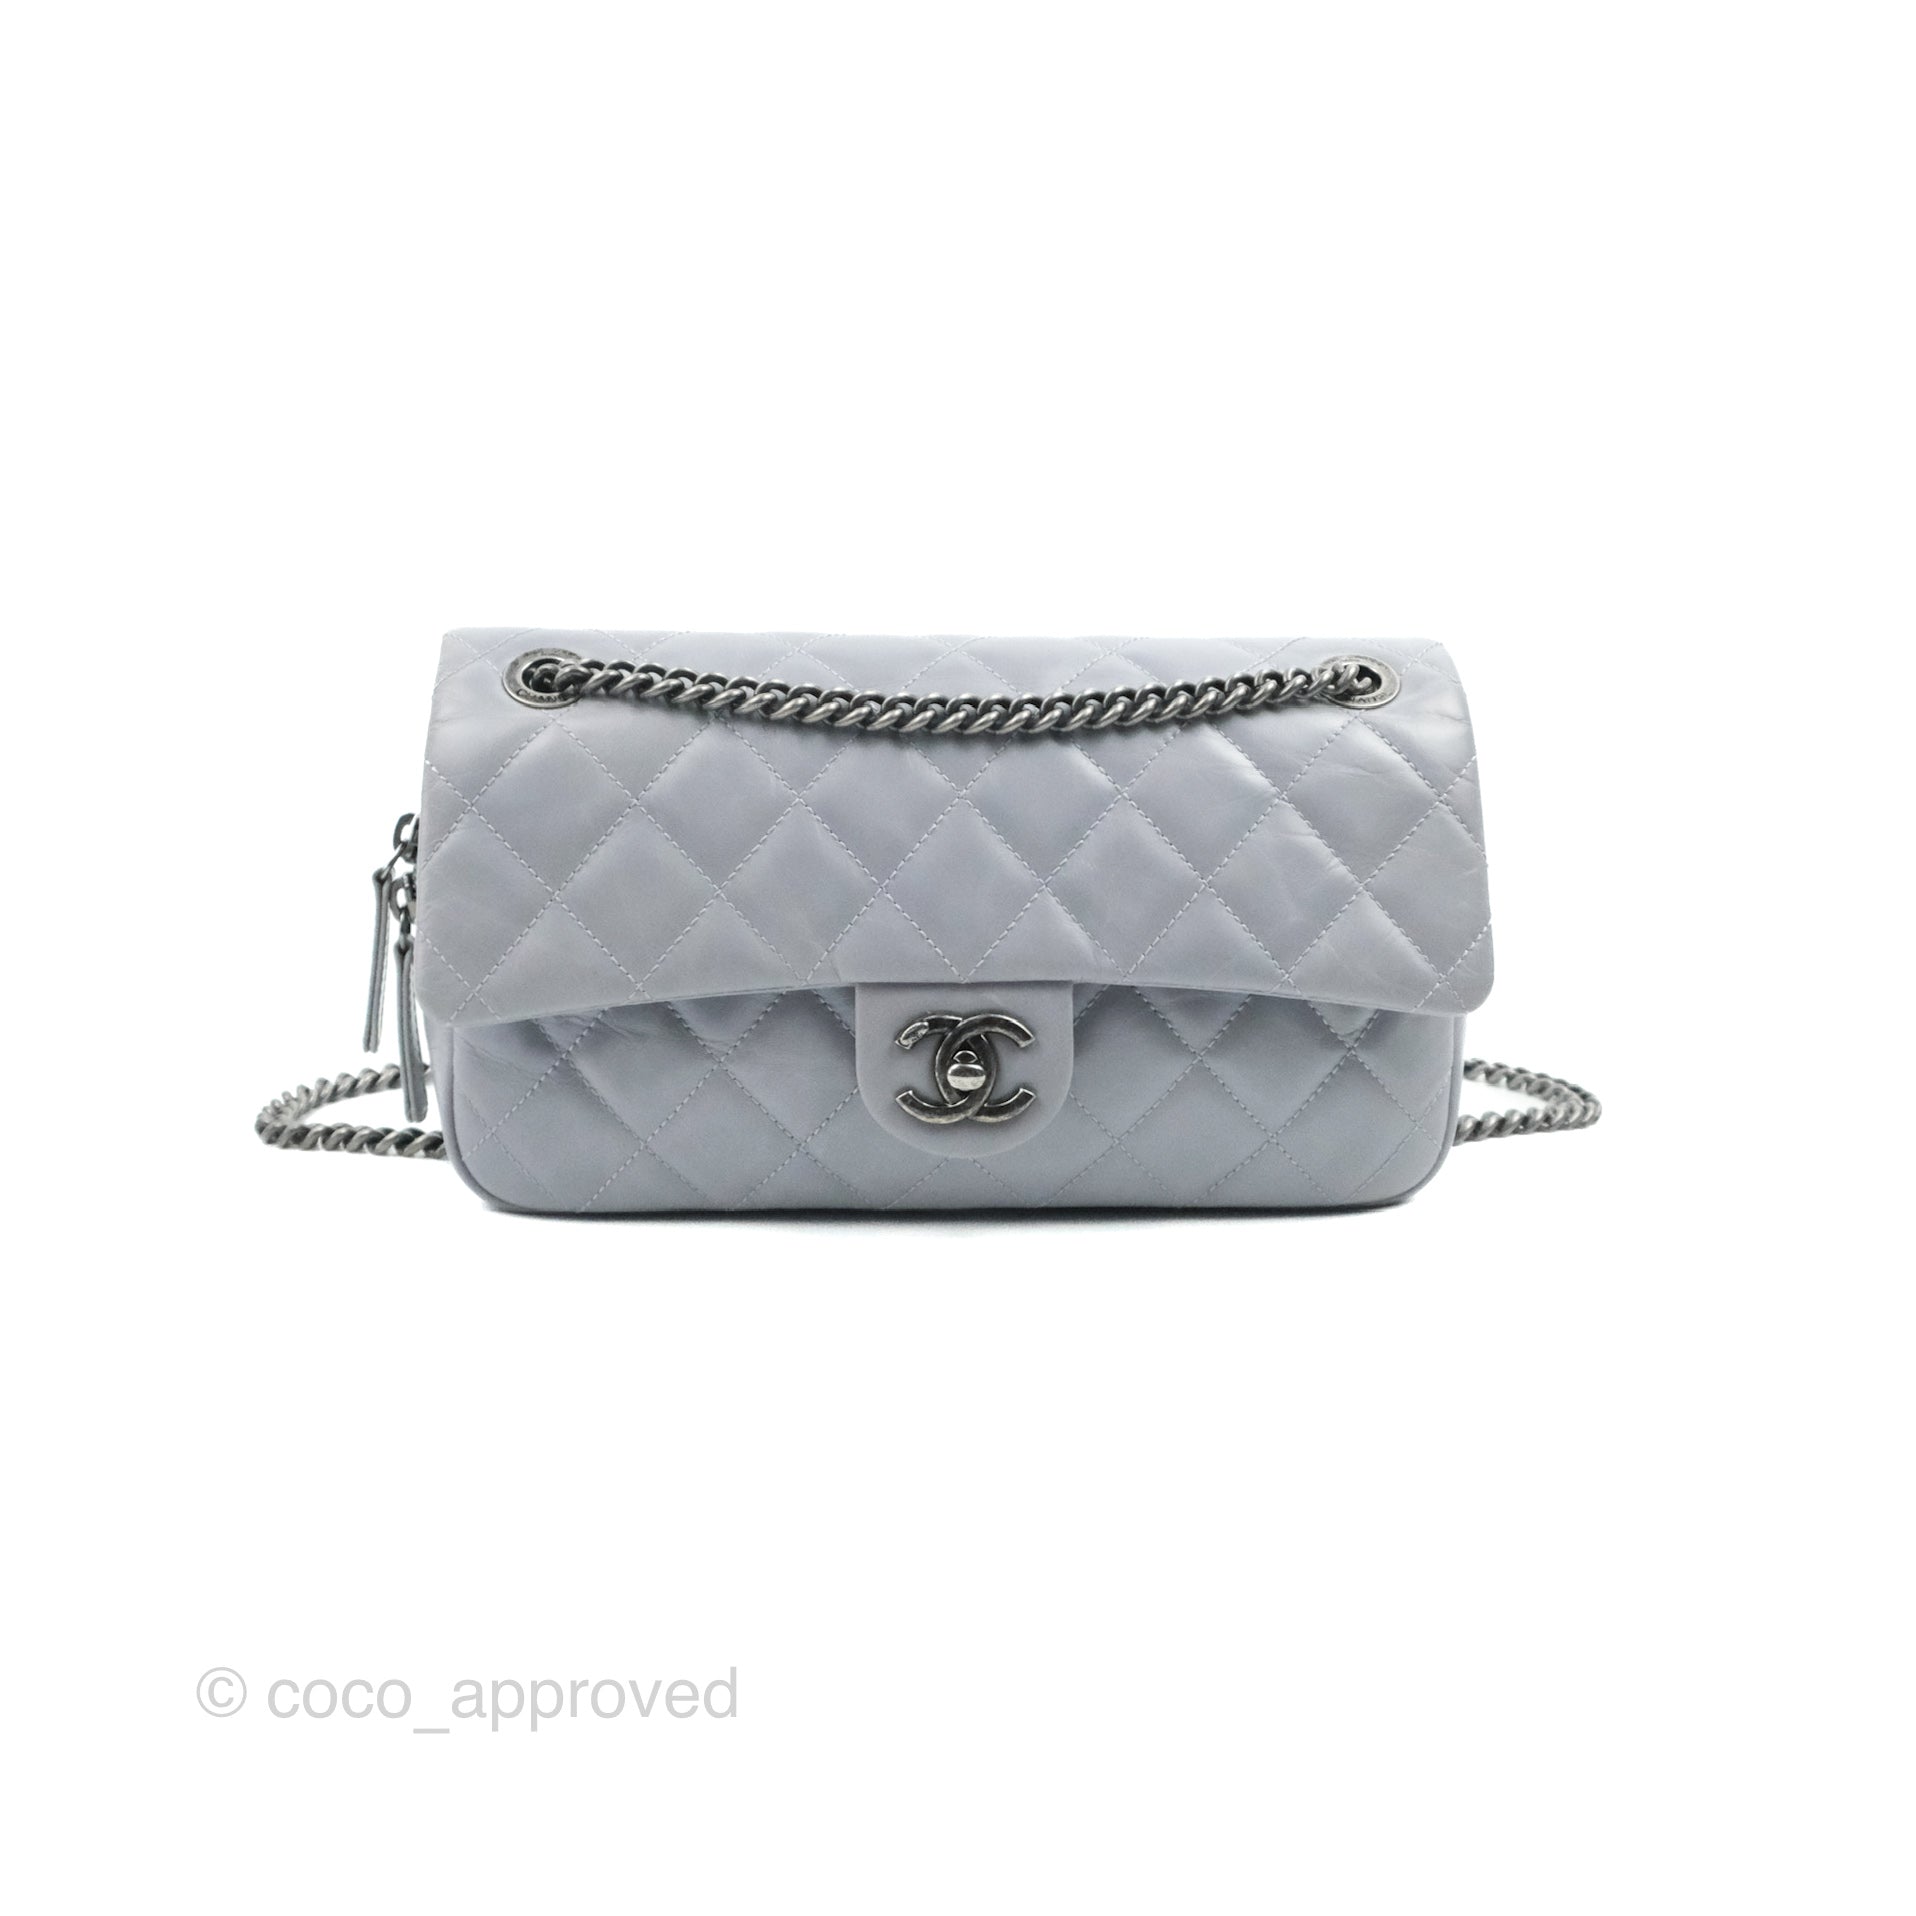 Chanel Medium Easy Flap Bag Light Grey Blue Aged Calfskin Ruthenium Hardware